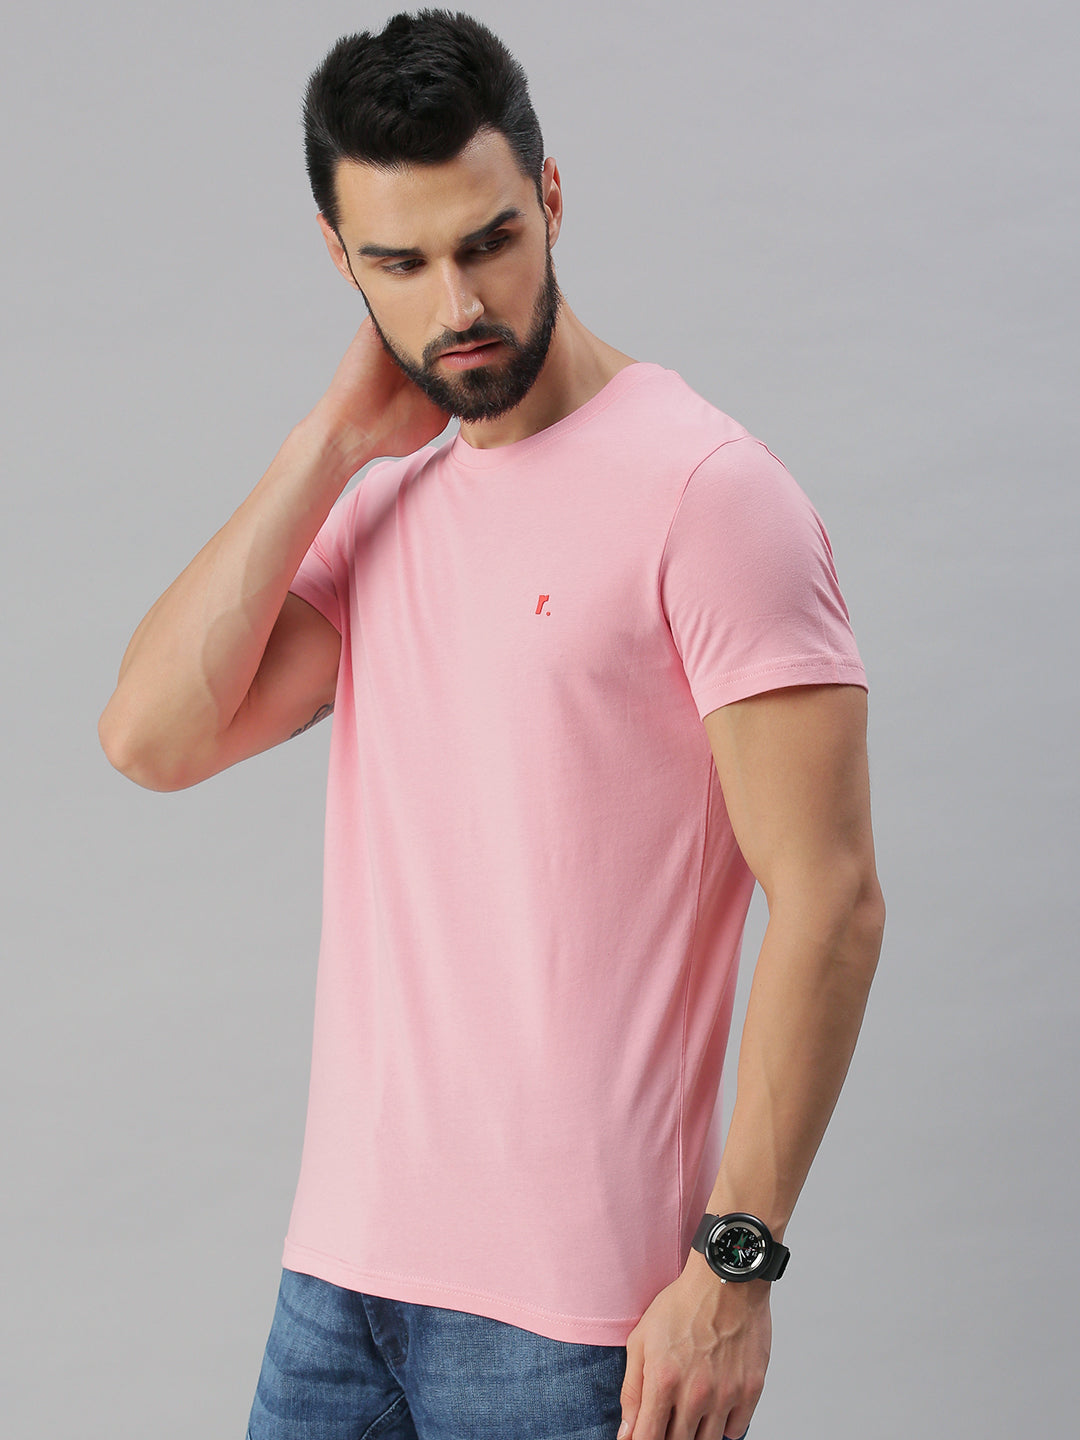 Solid pink round neck t-shirt